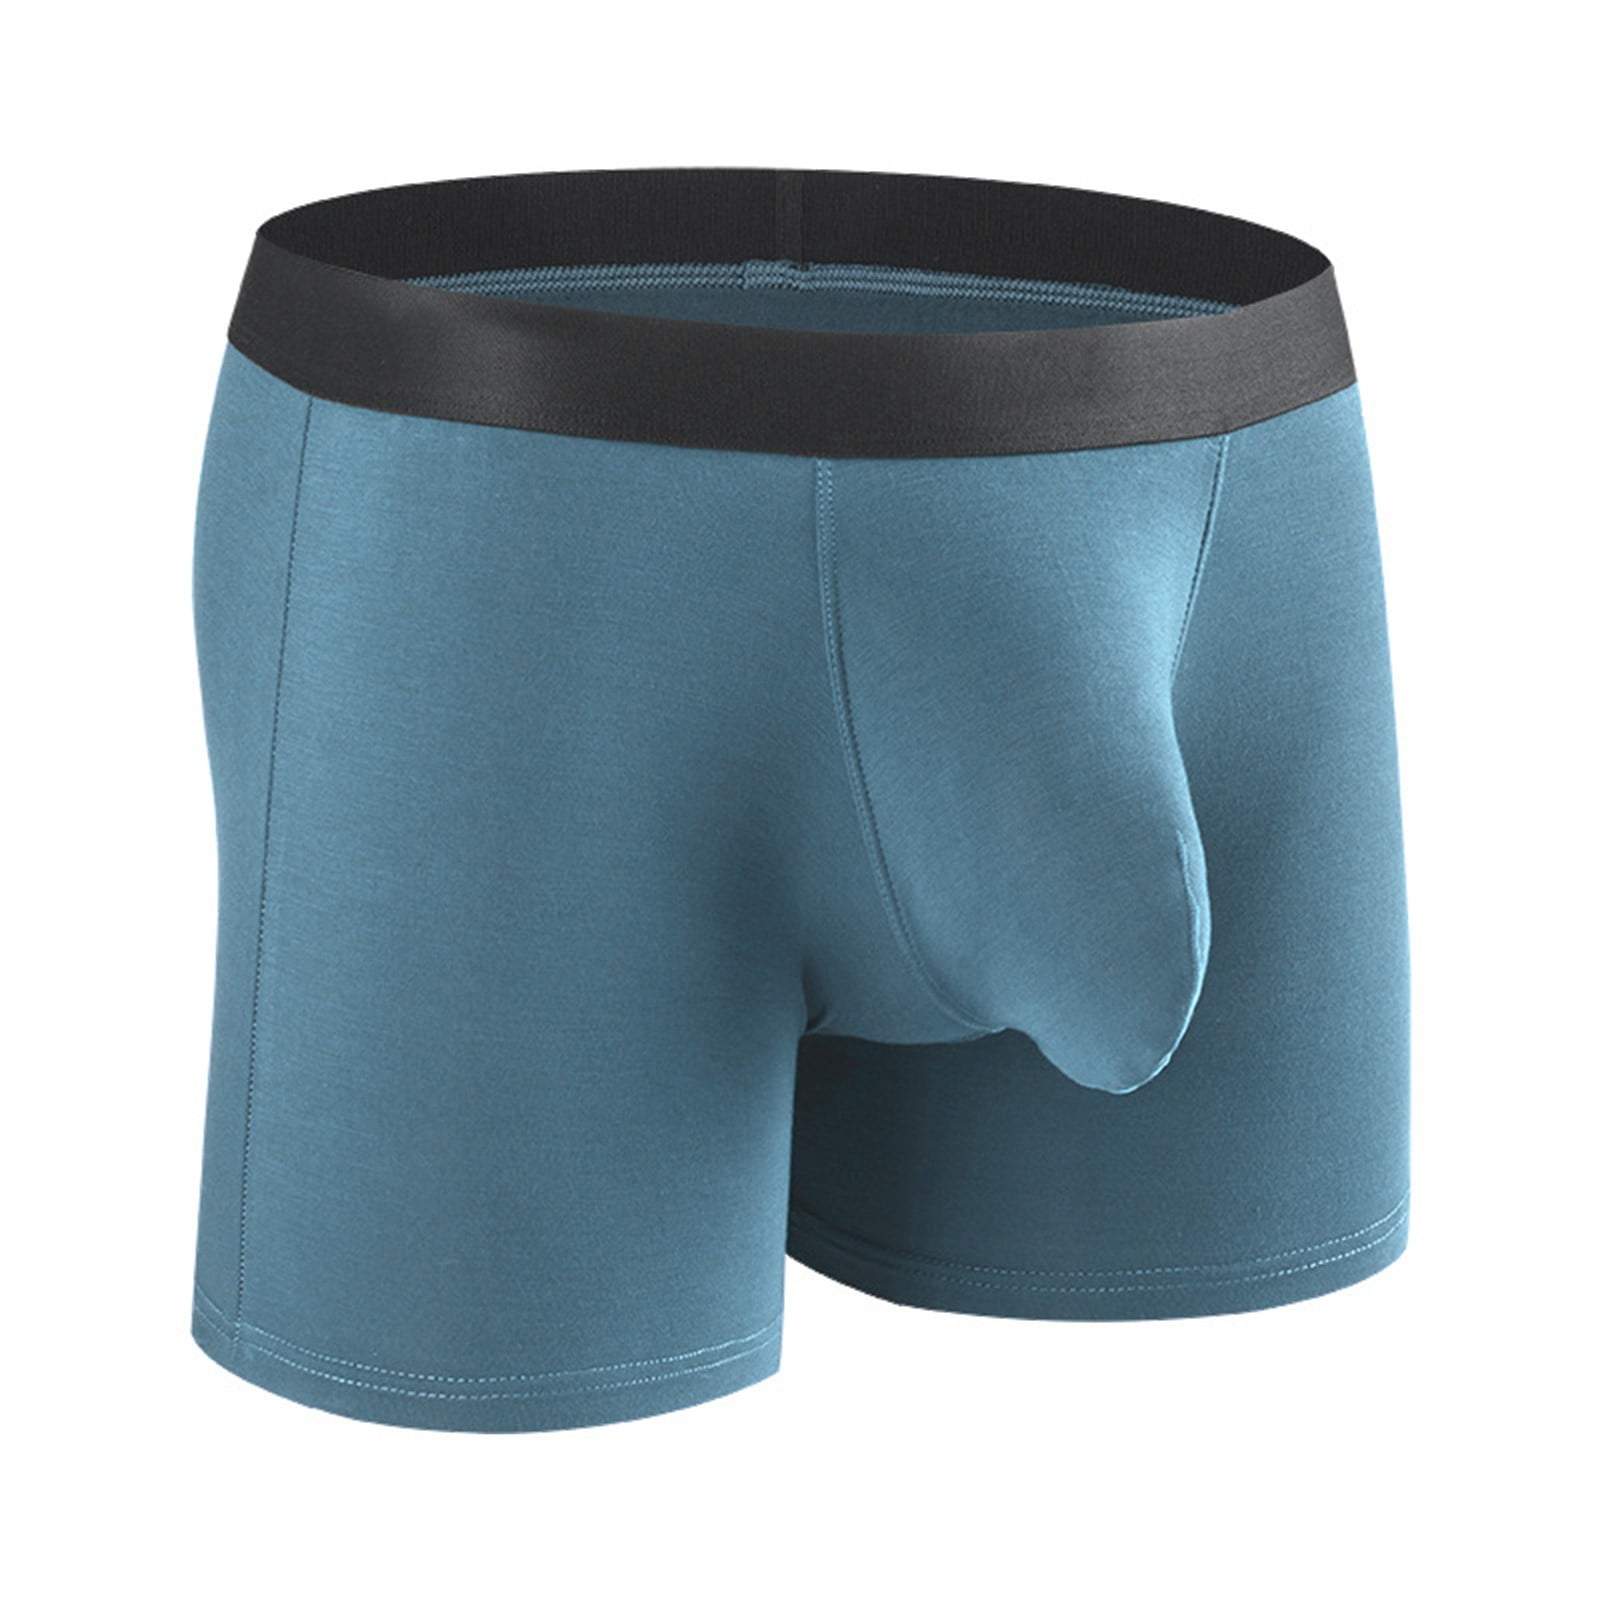 KaLI_store Men’s Underwear Men's Polyester Blend Total Support Pouch Boxer  Brief Grey,L